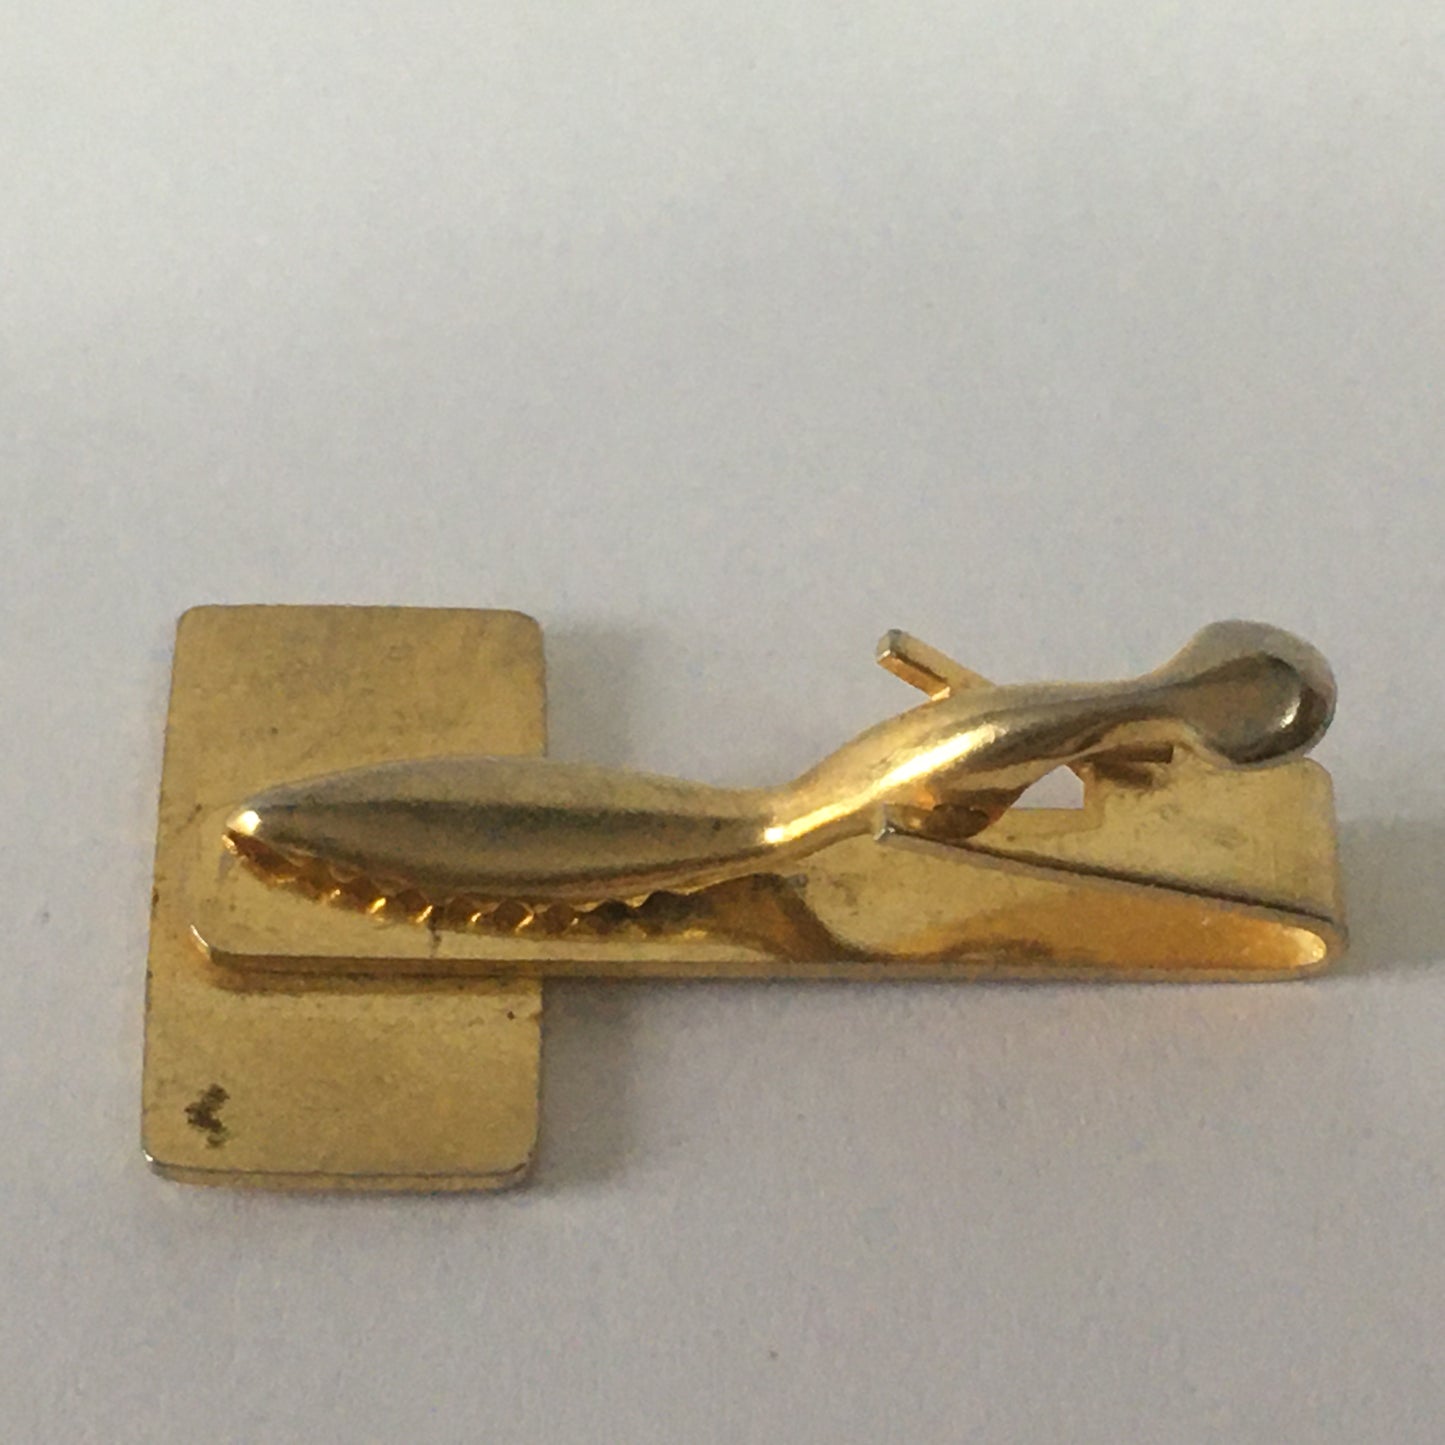 Ferrari Tie Clip in Gold Colored Metal with Enamelled Ferrari Emblem